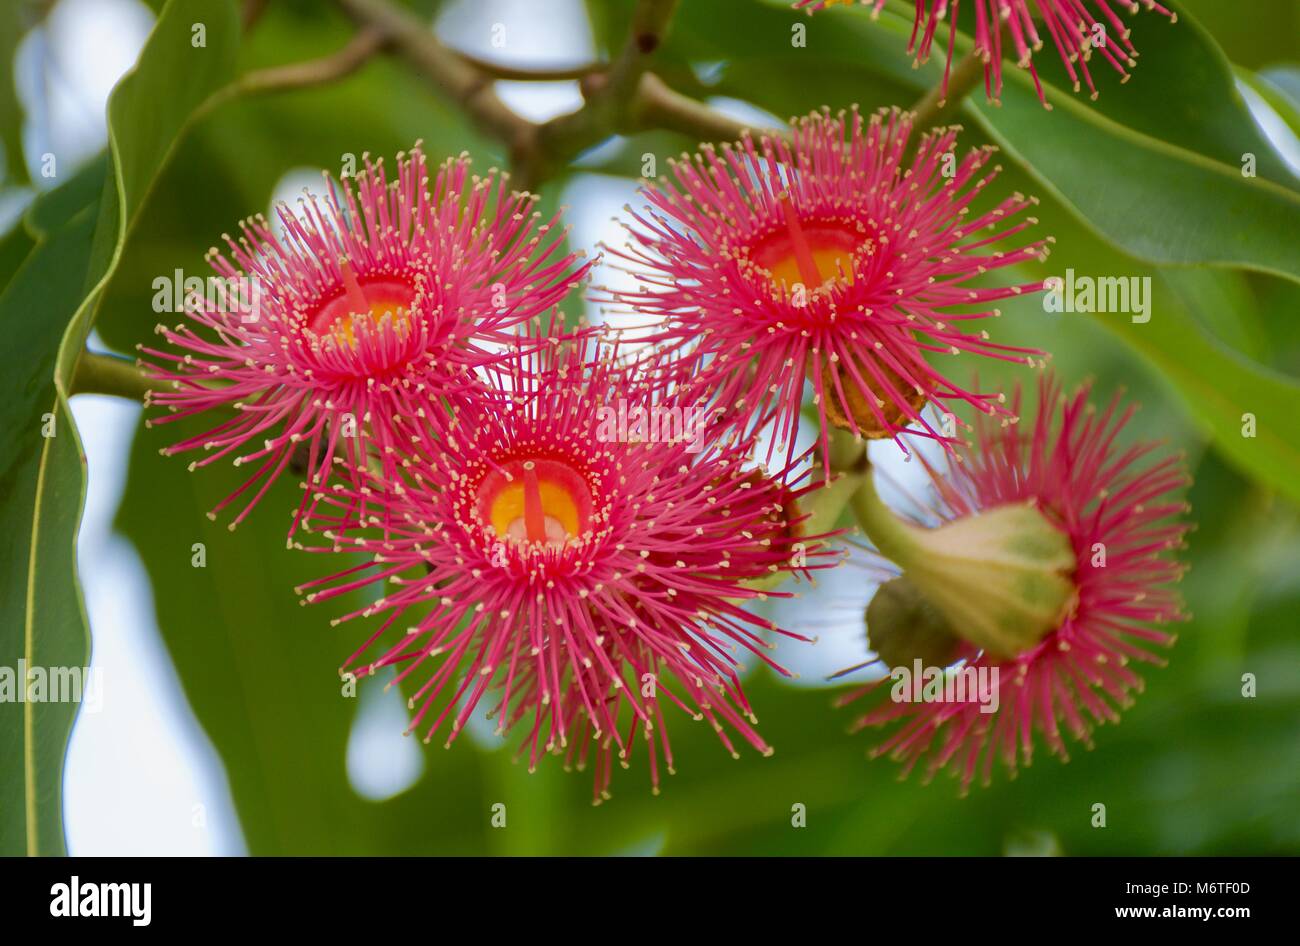 stunning bright pink flowers of the Australian Native Eucalyptus calophylla Stock Photo